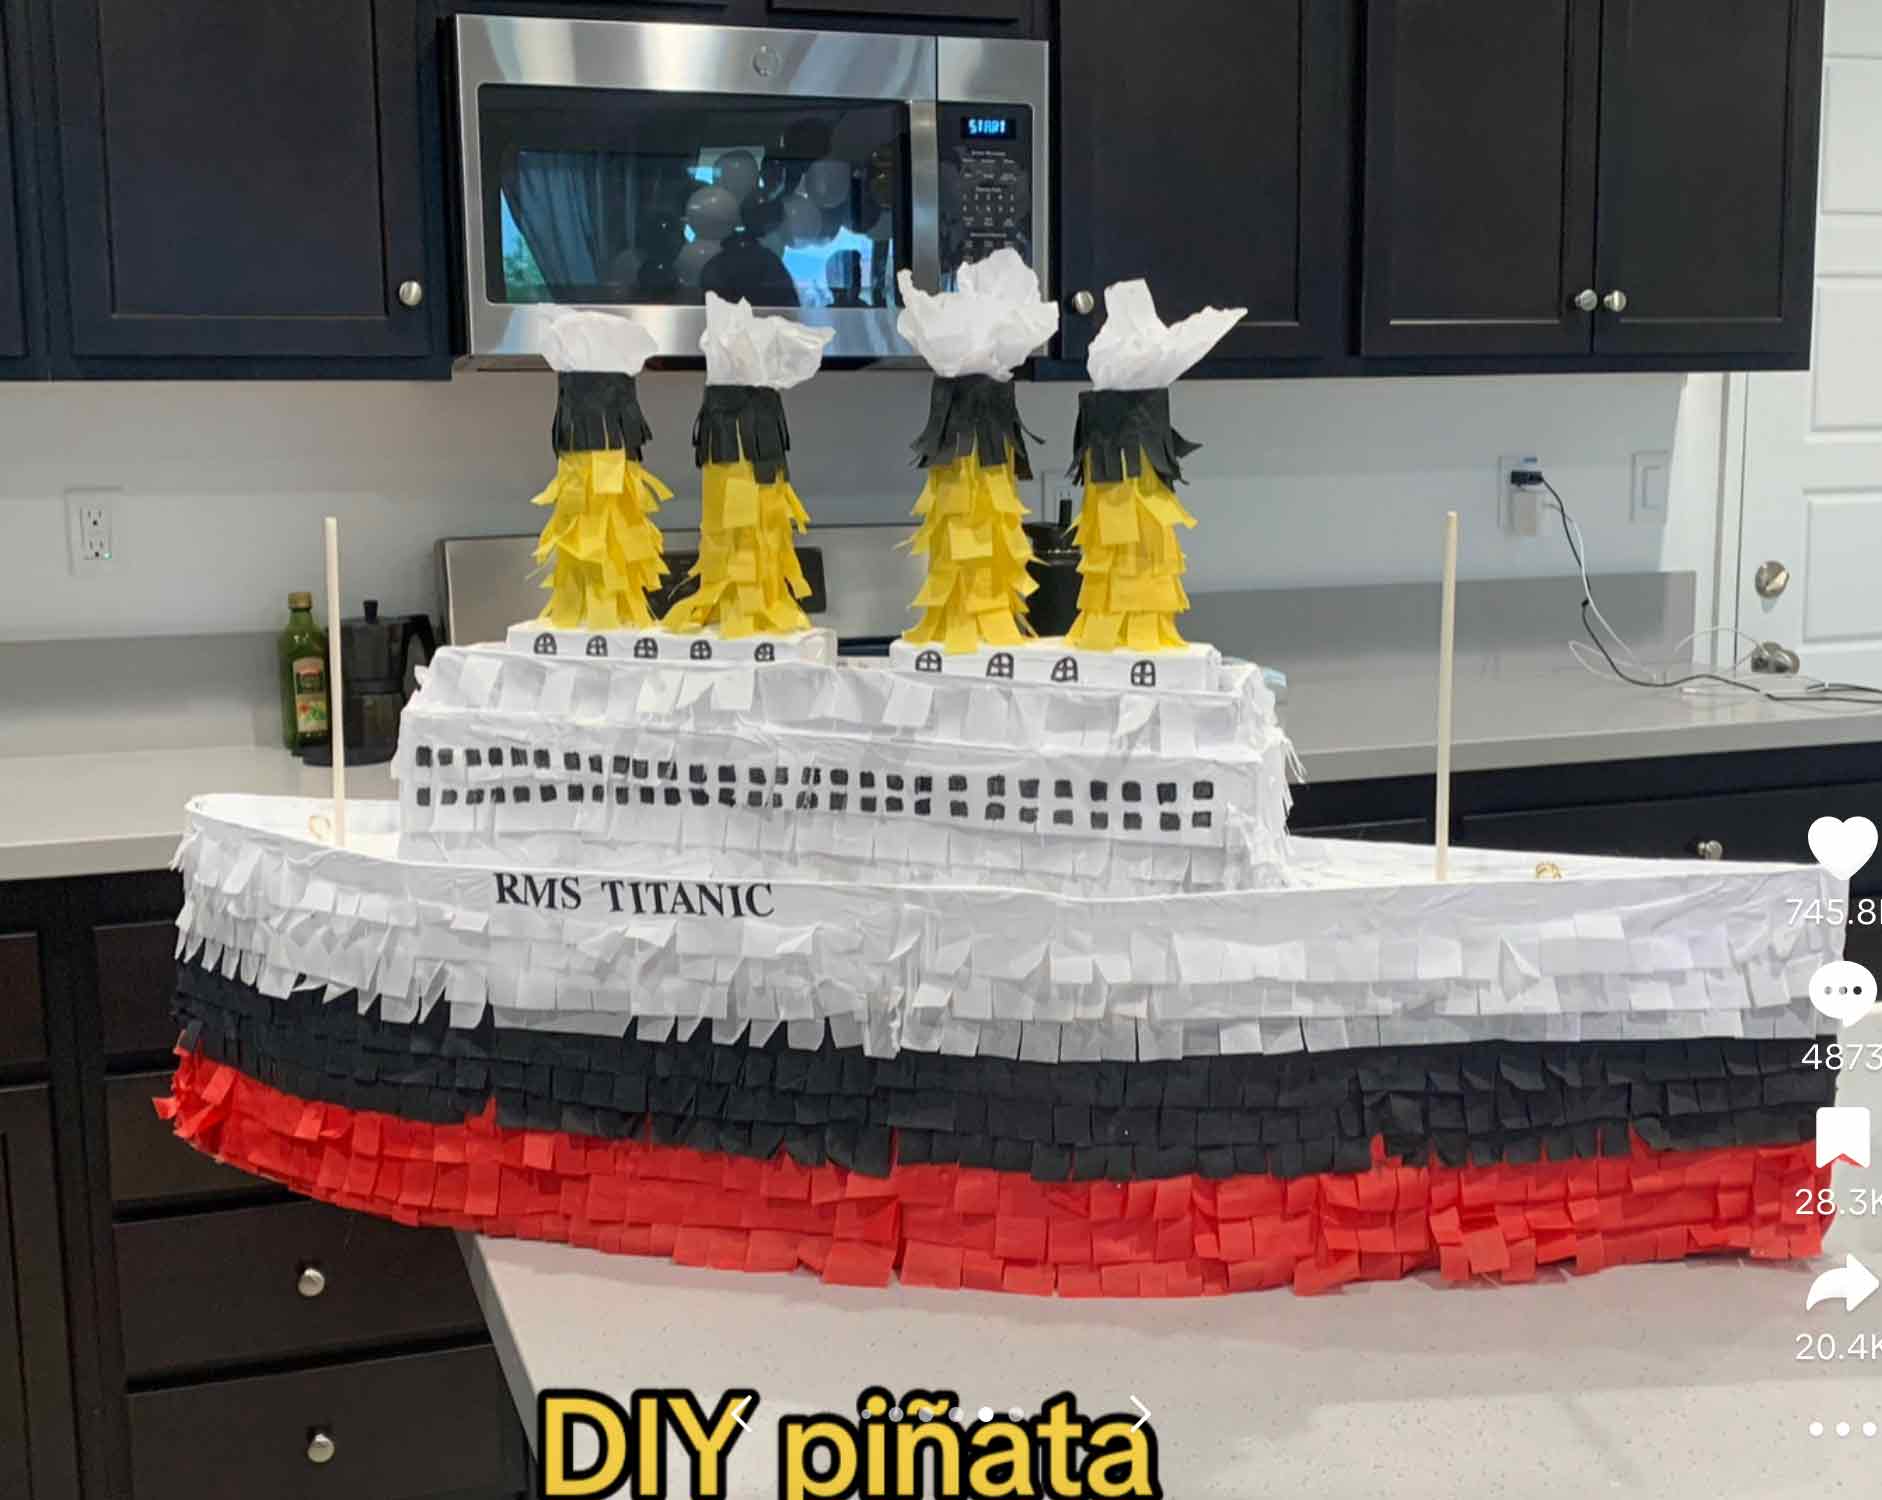 Titanic Themes Birthday Party - torte - W W A B Rms Titanic Aa B Start Aaa Diy piata 745.81 4873